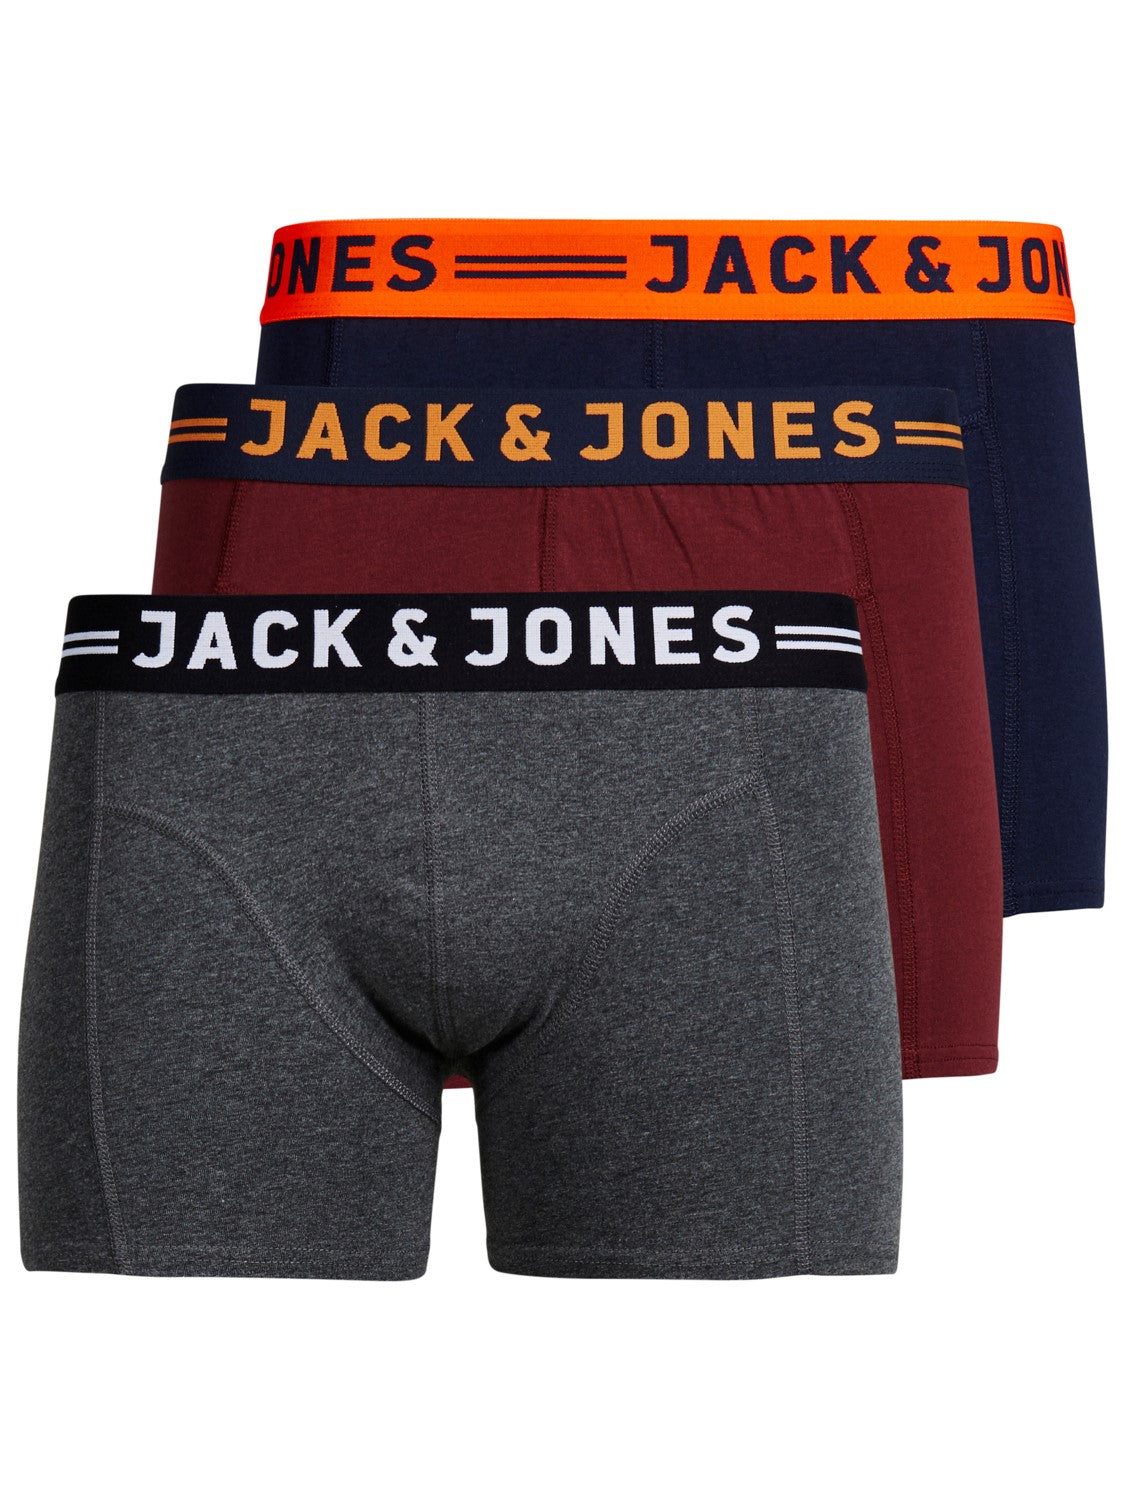 Lichfield Trunks 3 Pack by Jack Jones - Spirit Clothing